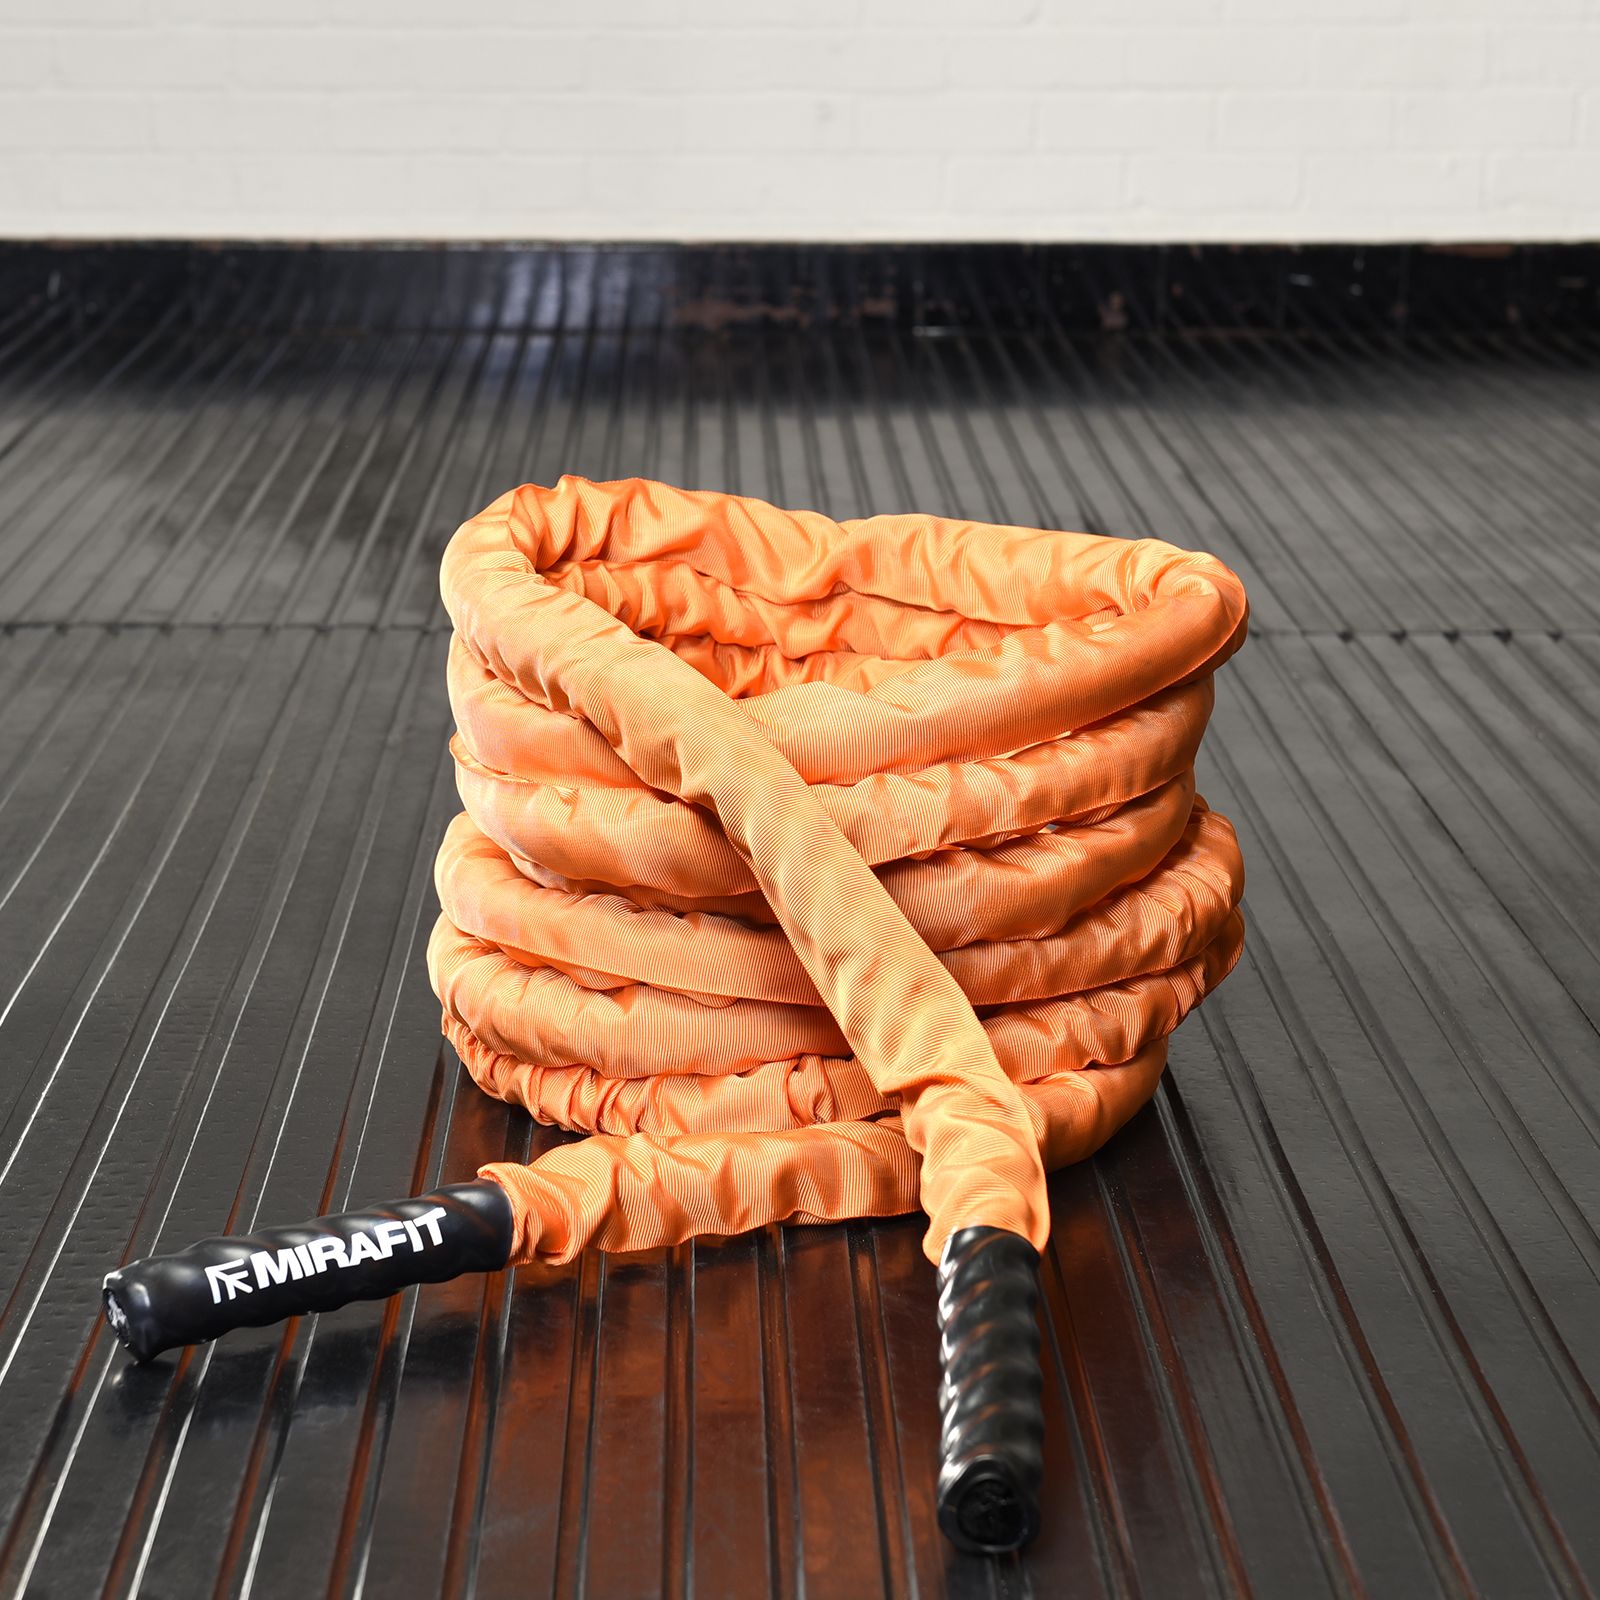 Mirafit Sleeve Battle Rope Orange Review